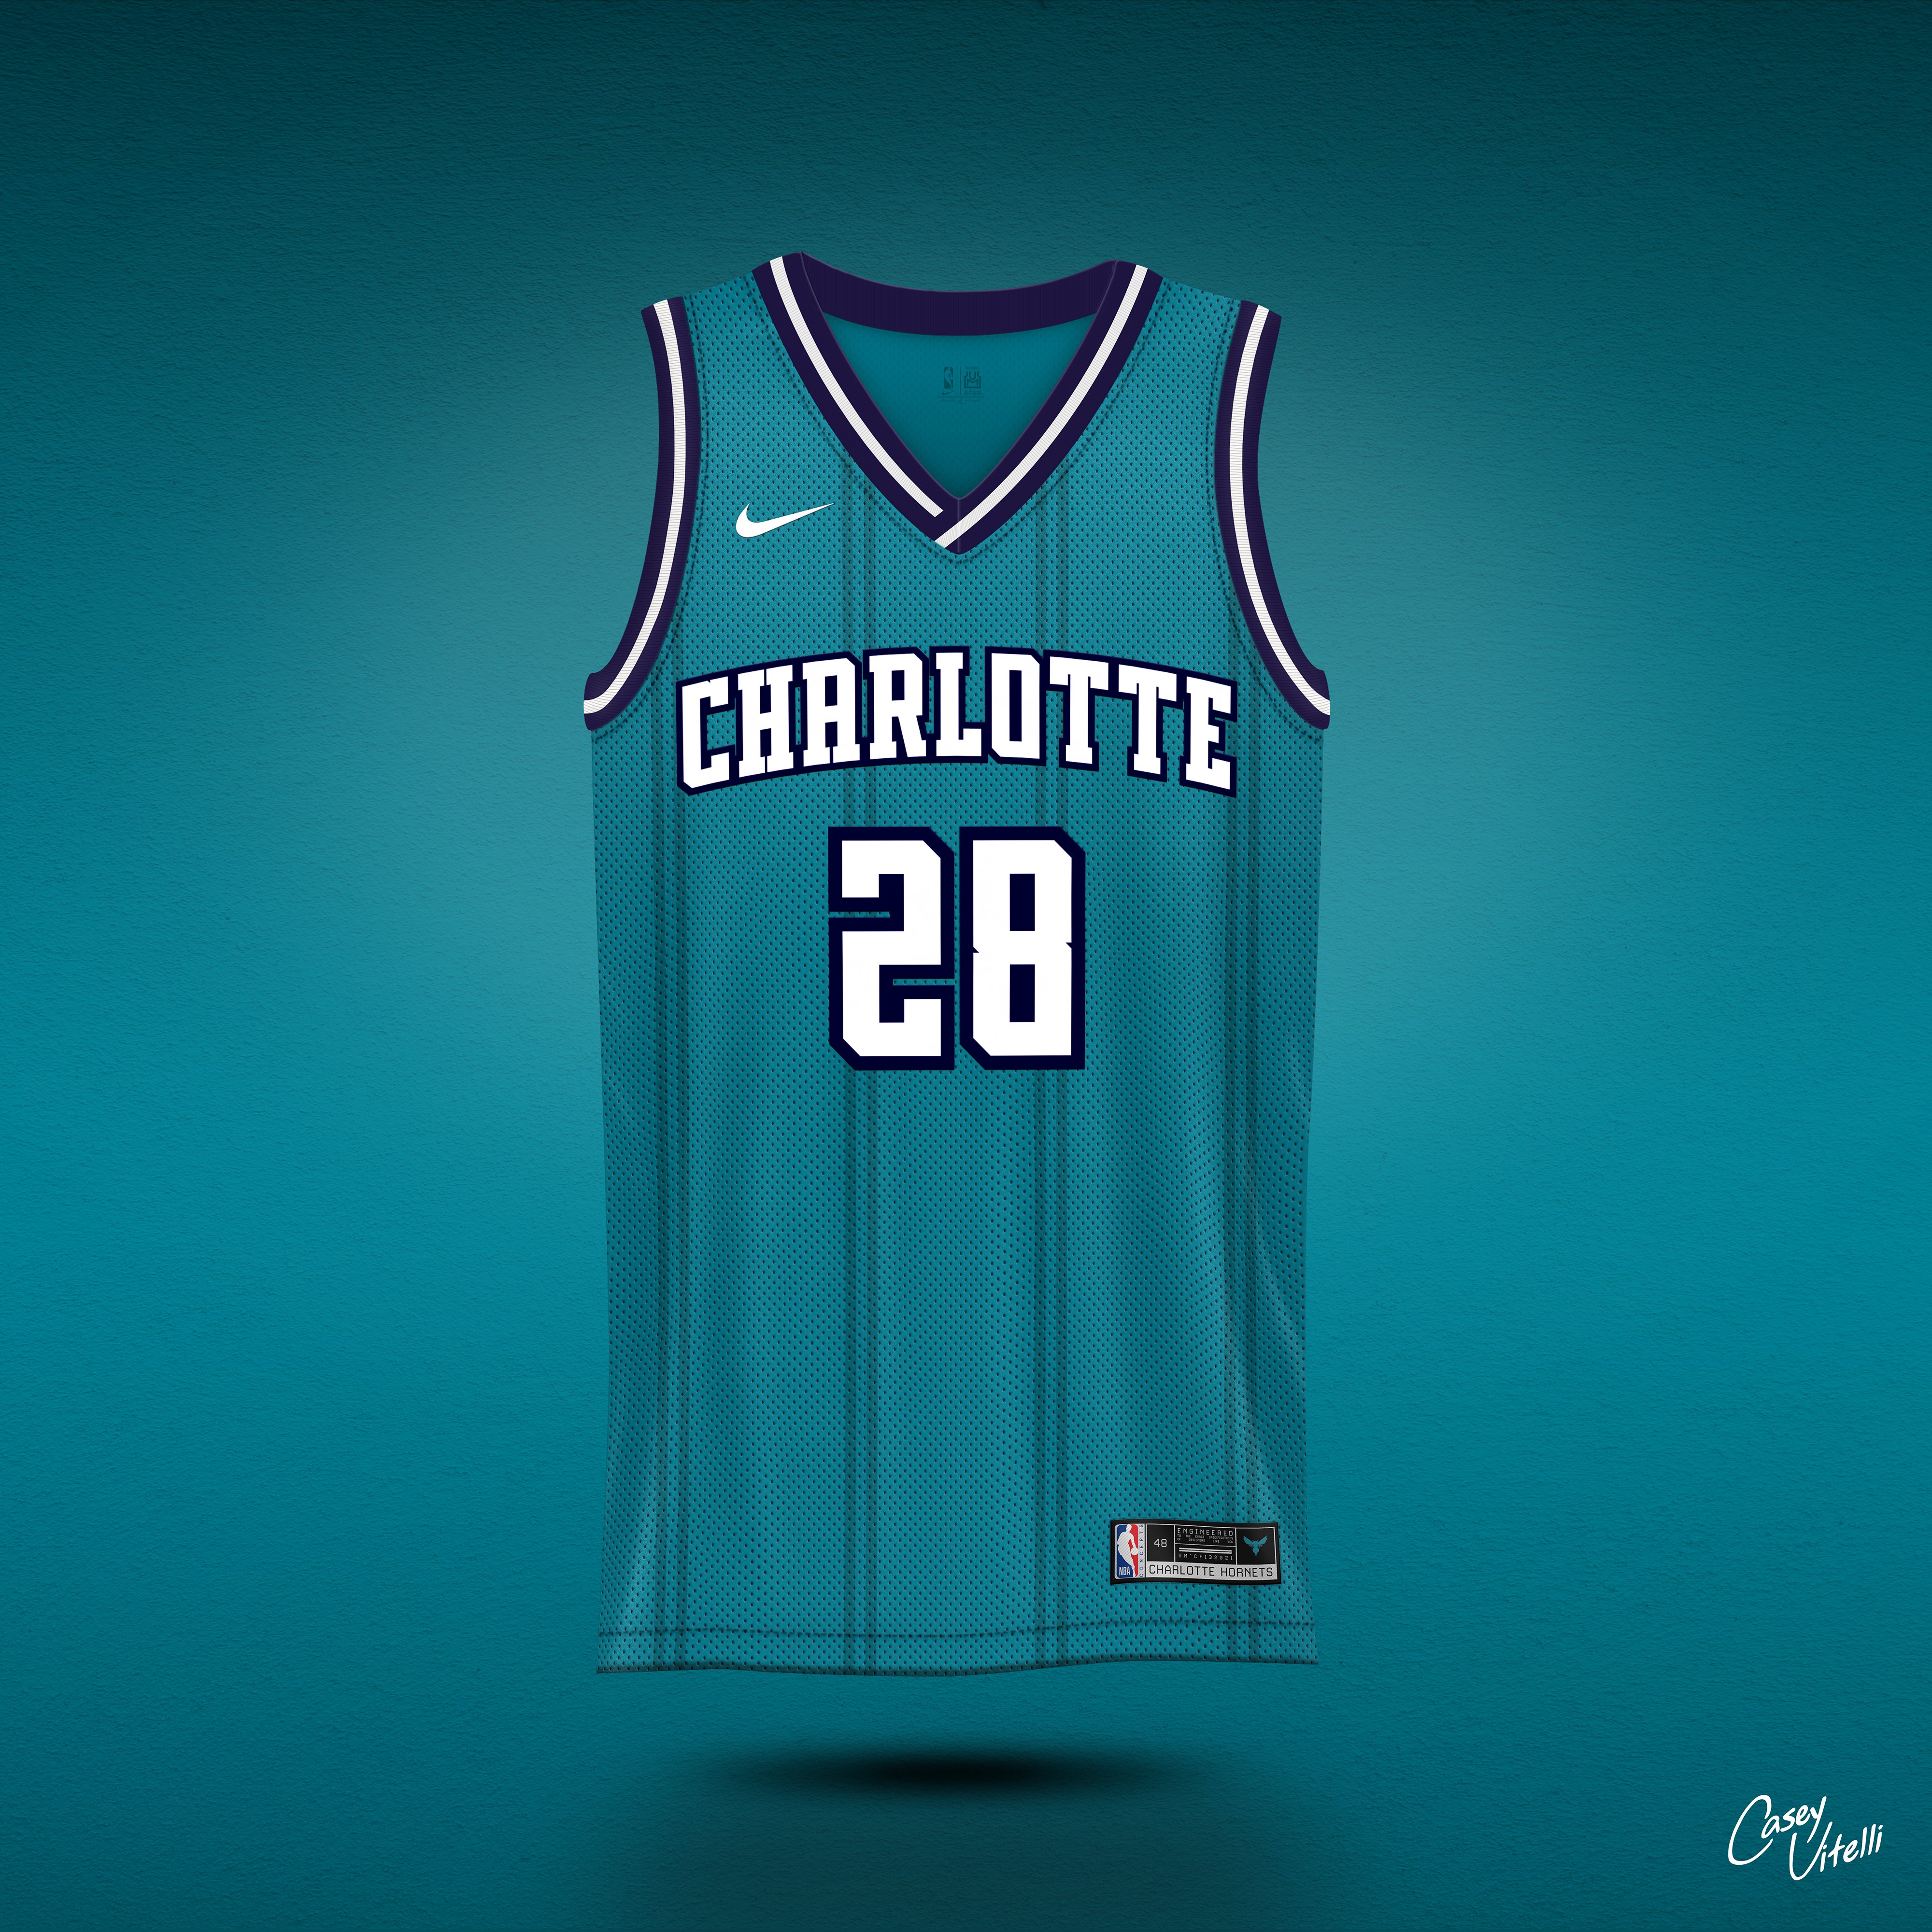 Casey Vitelli on X: NBA Rebrand Project - Boston Celtics Earned @celtics  #BleedGreen  / X